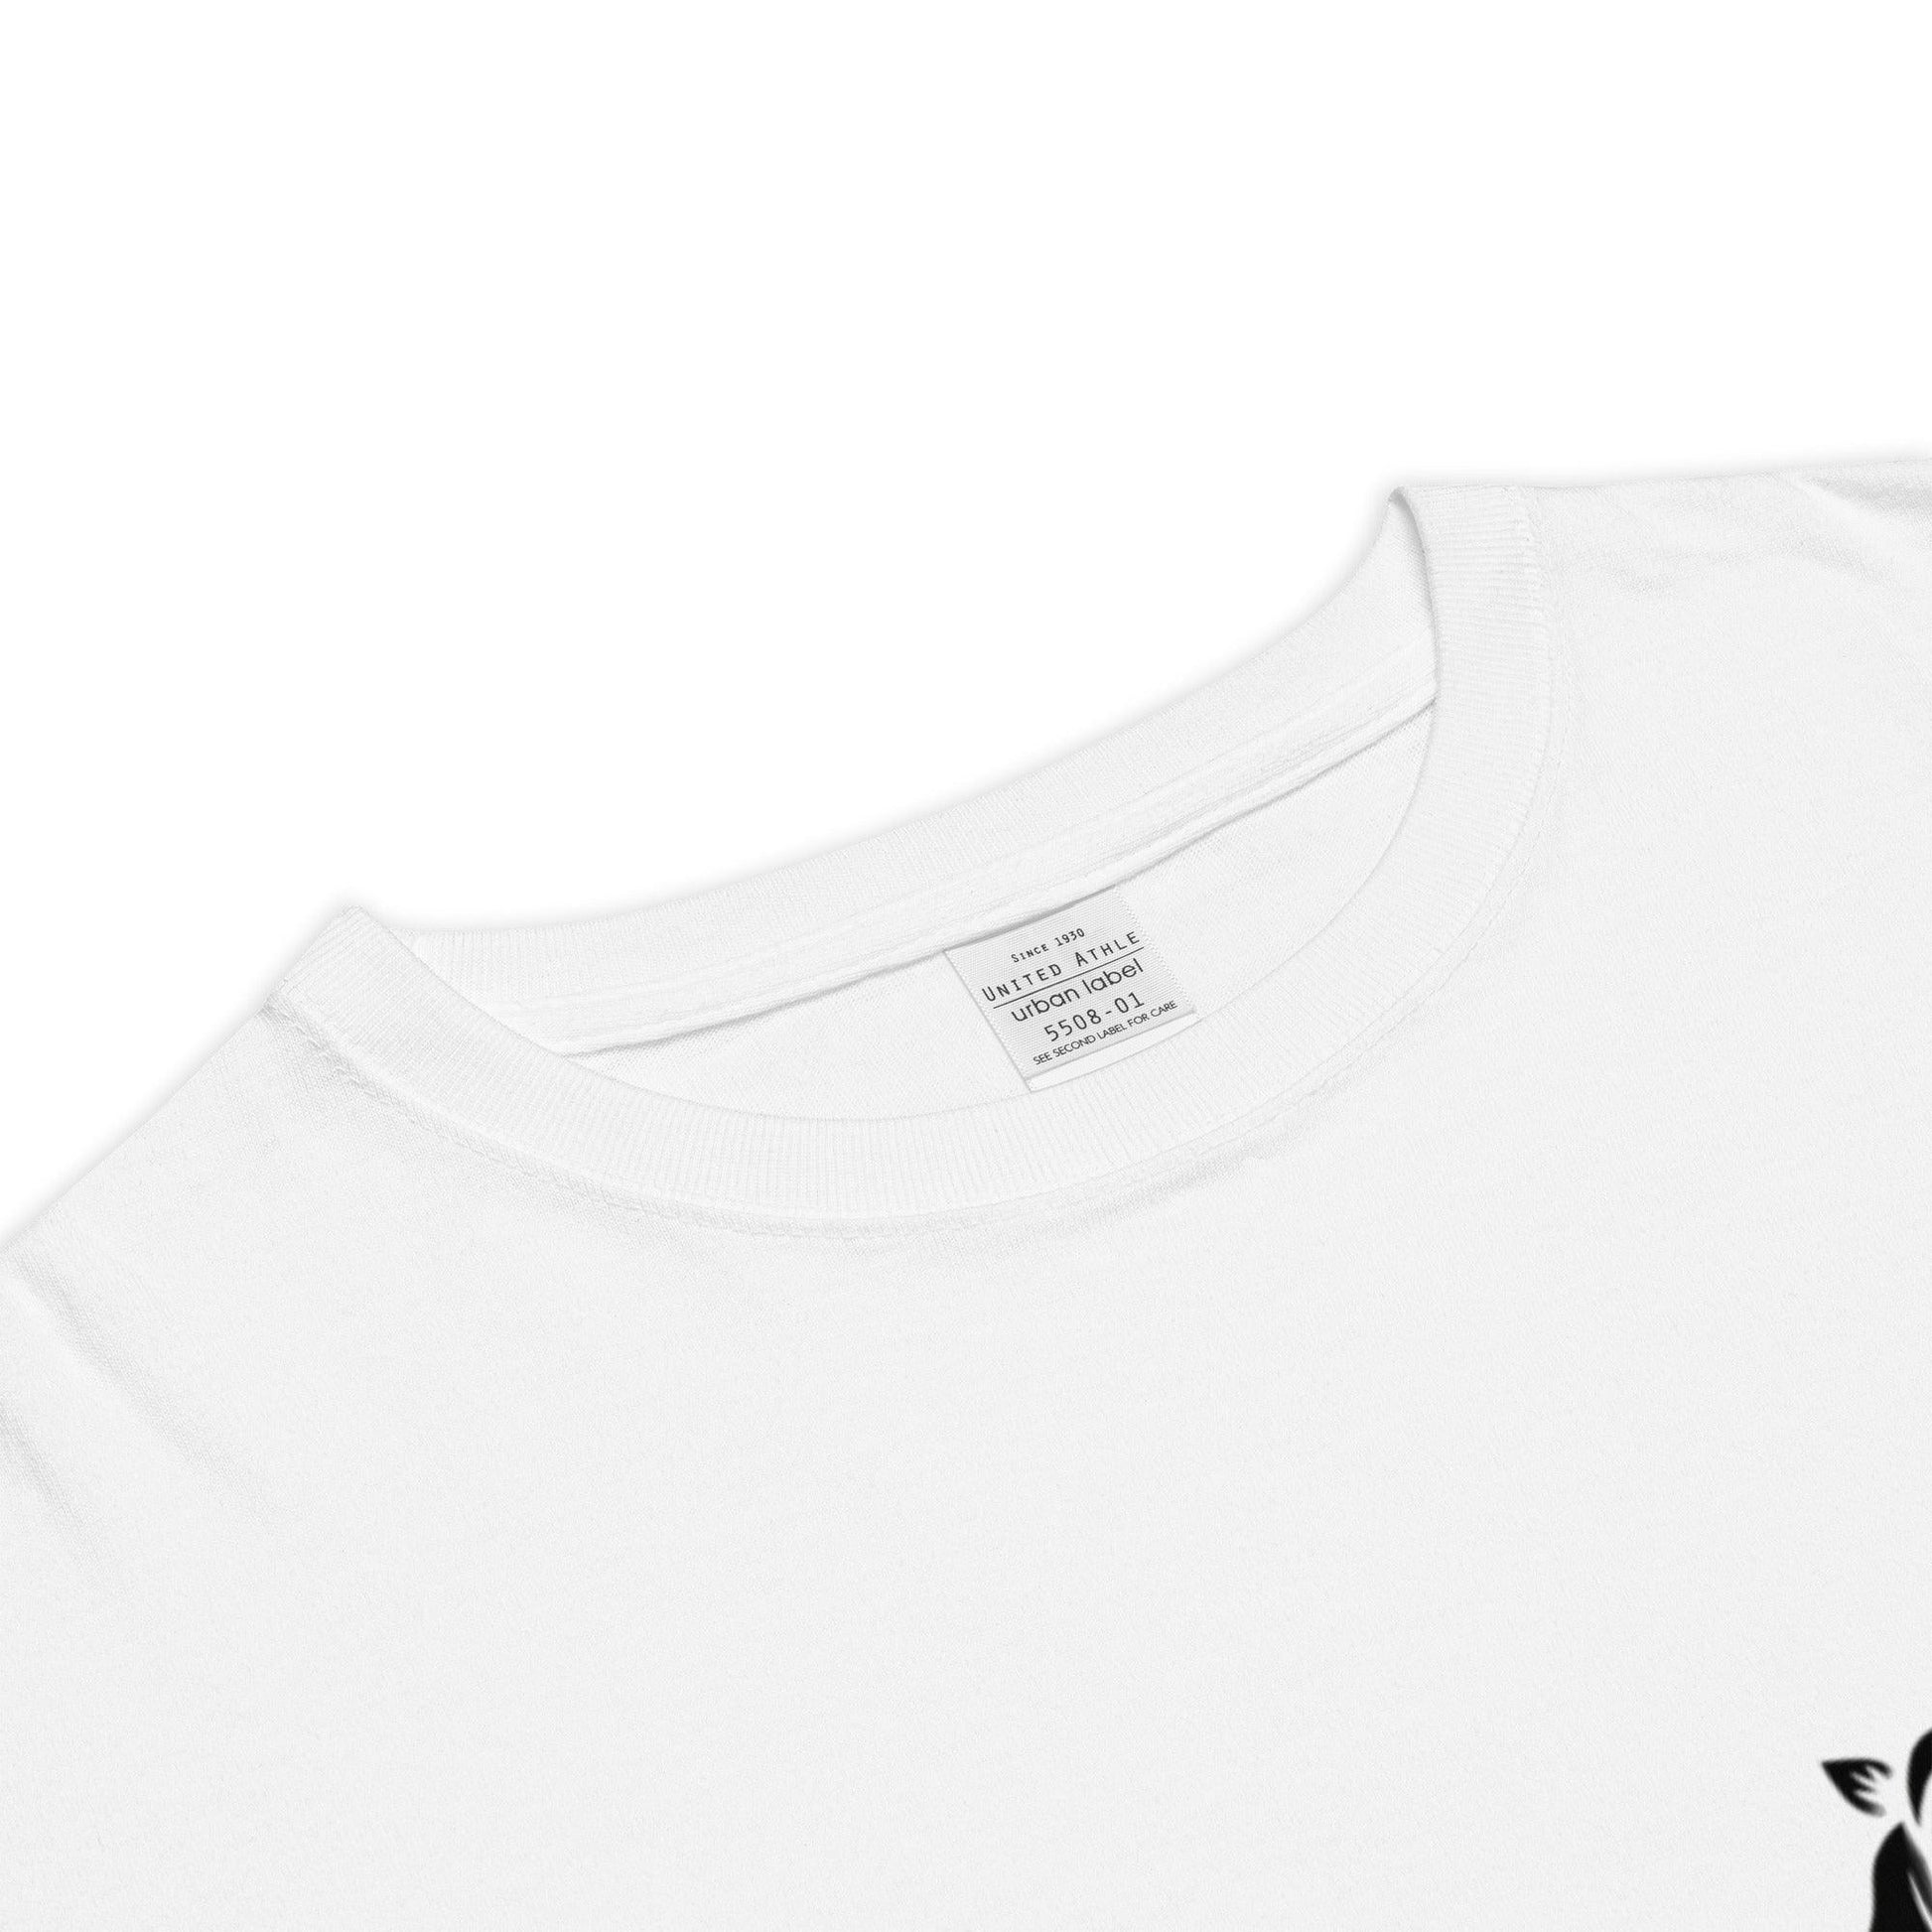 FUNDAMENTAL Monochrome T-Shirt White - ROSE Society